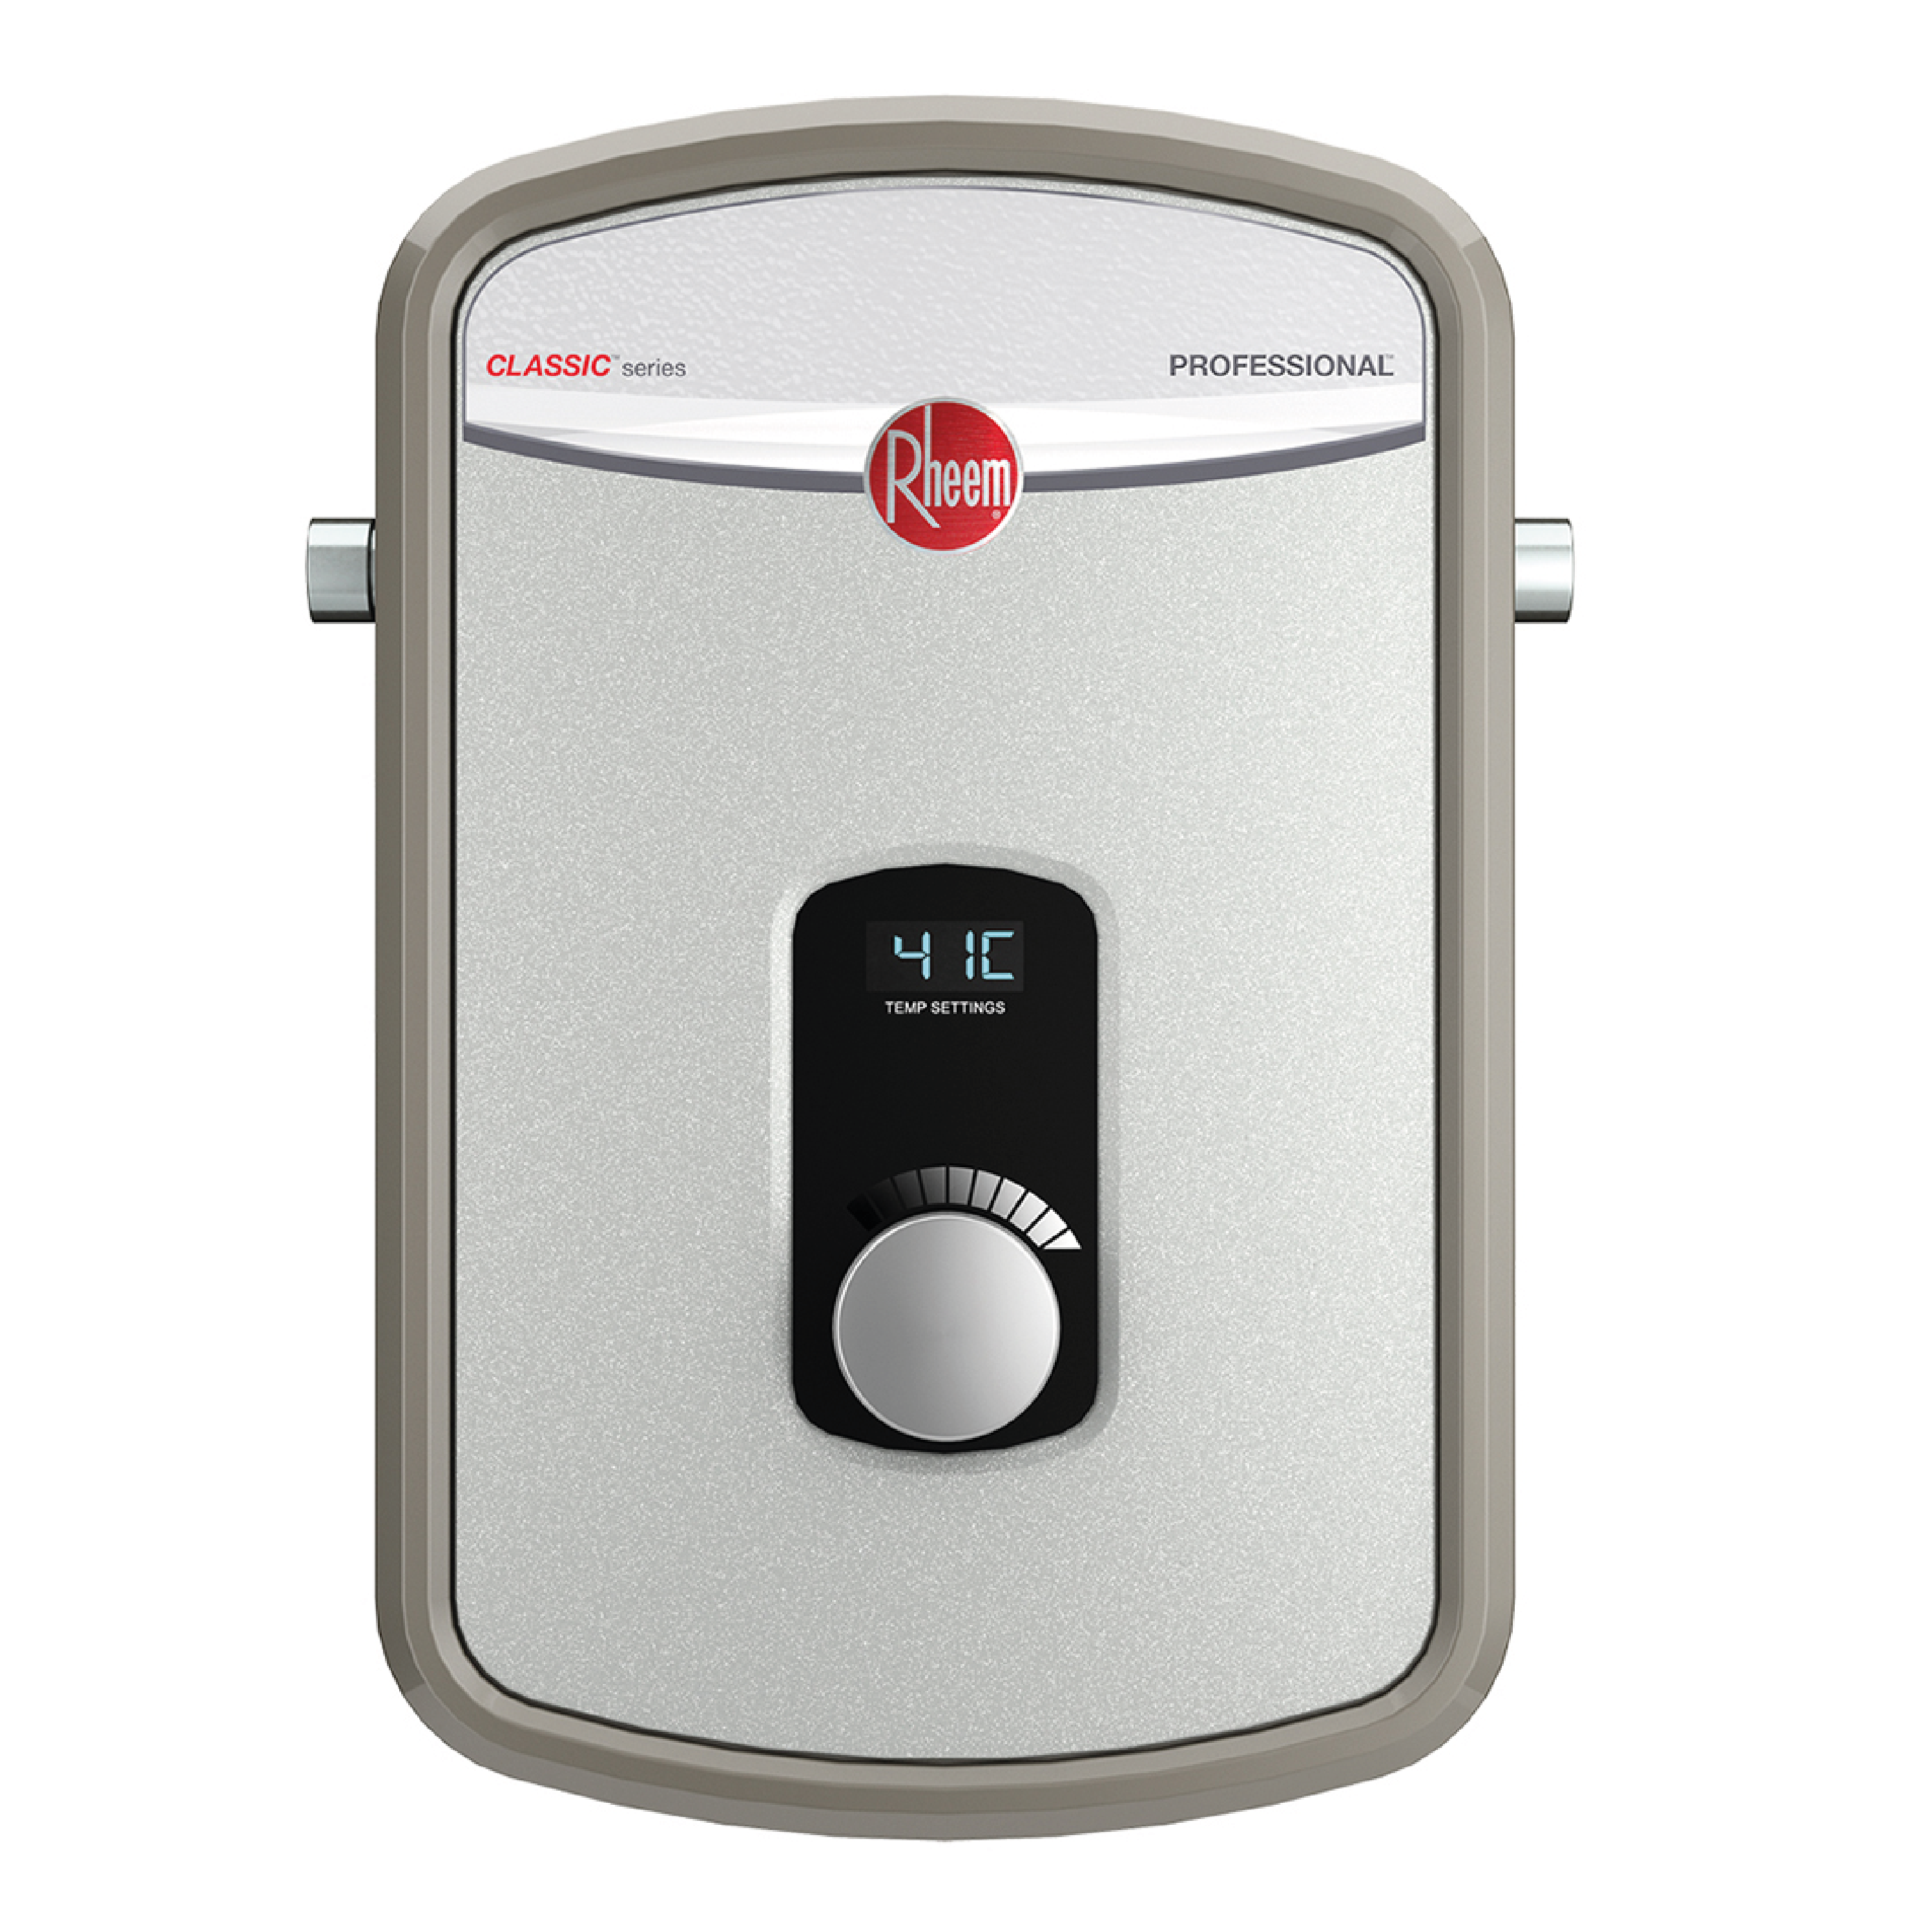 Calentador eléctrico de bolsillo calentador de manos, calor de 115 grados  durante más de 8 horas, batería calentada también carga iPhone o teléfono